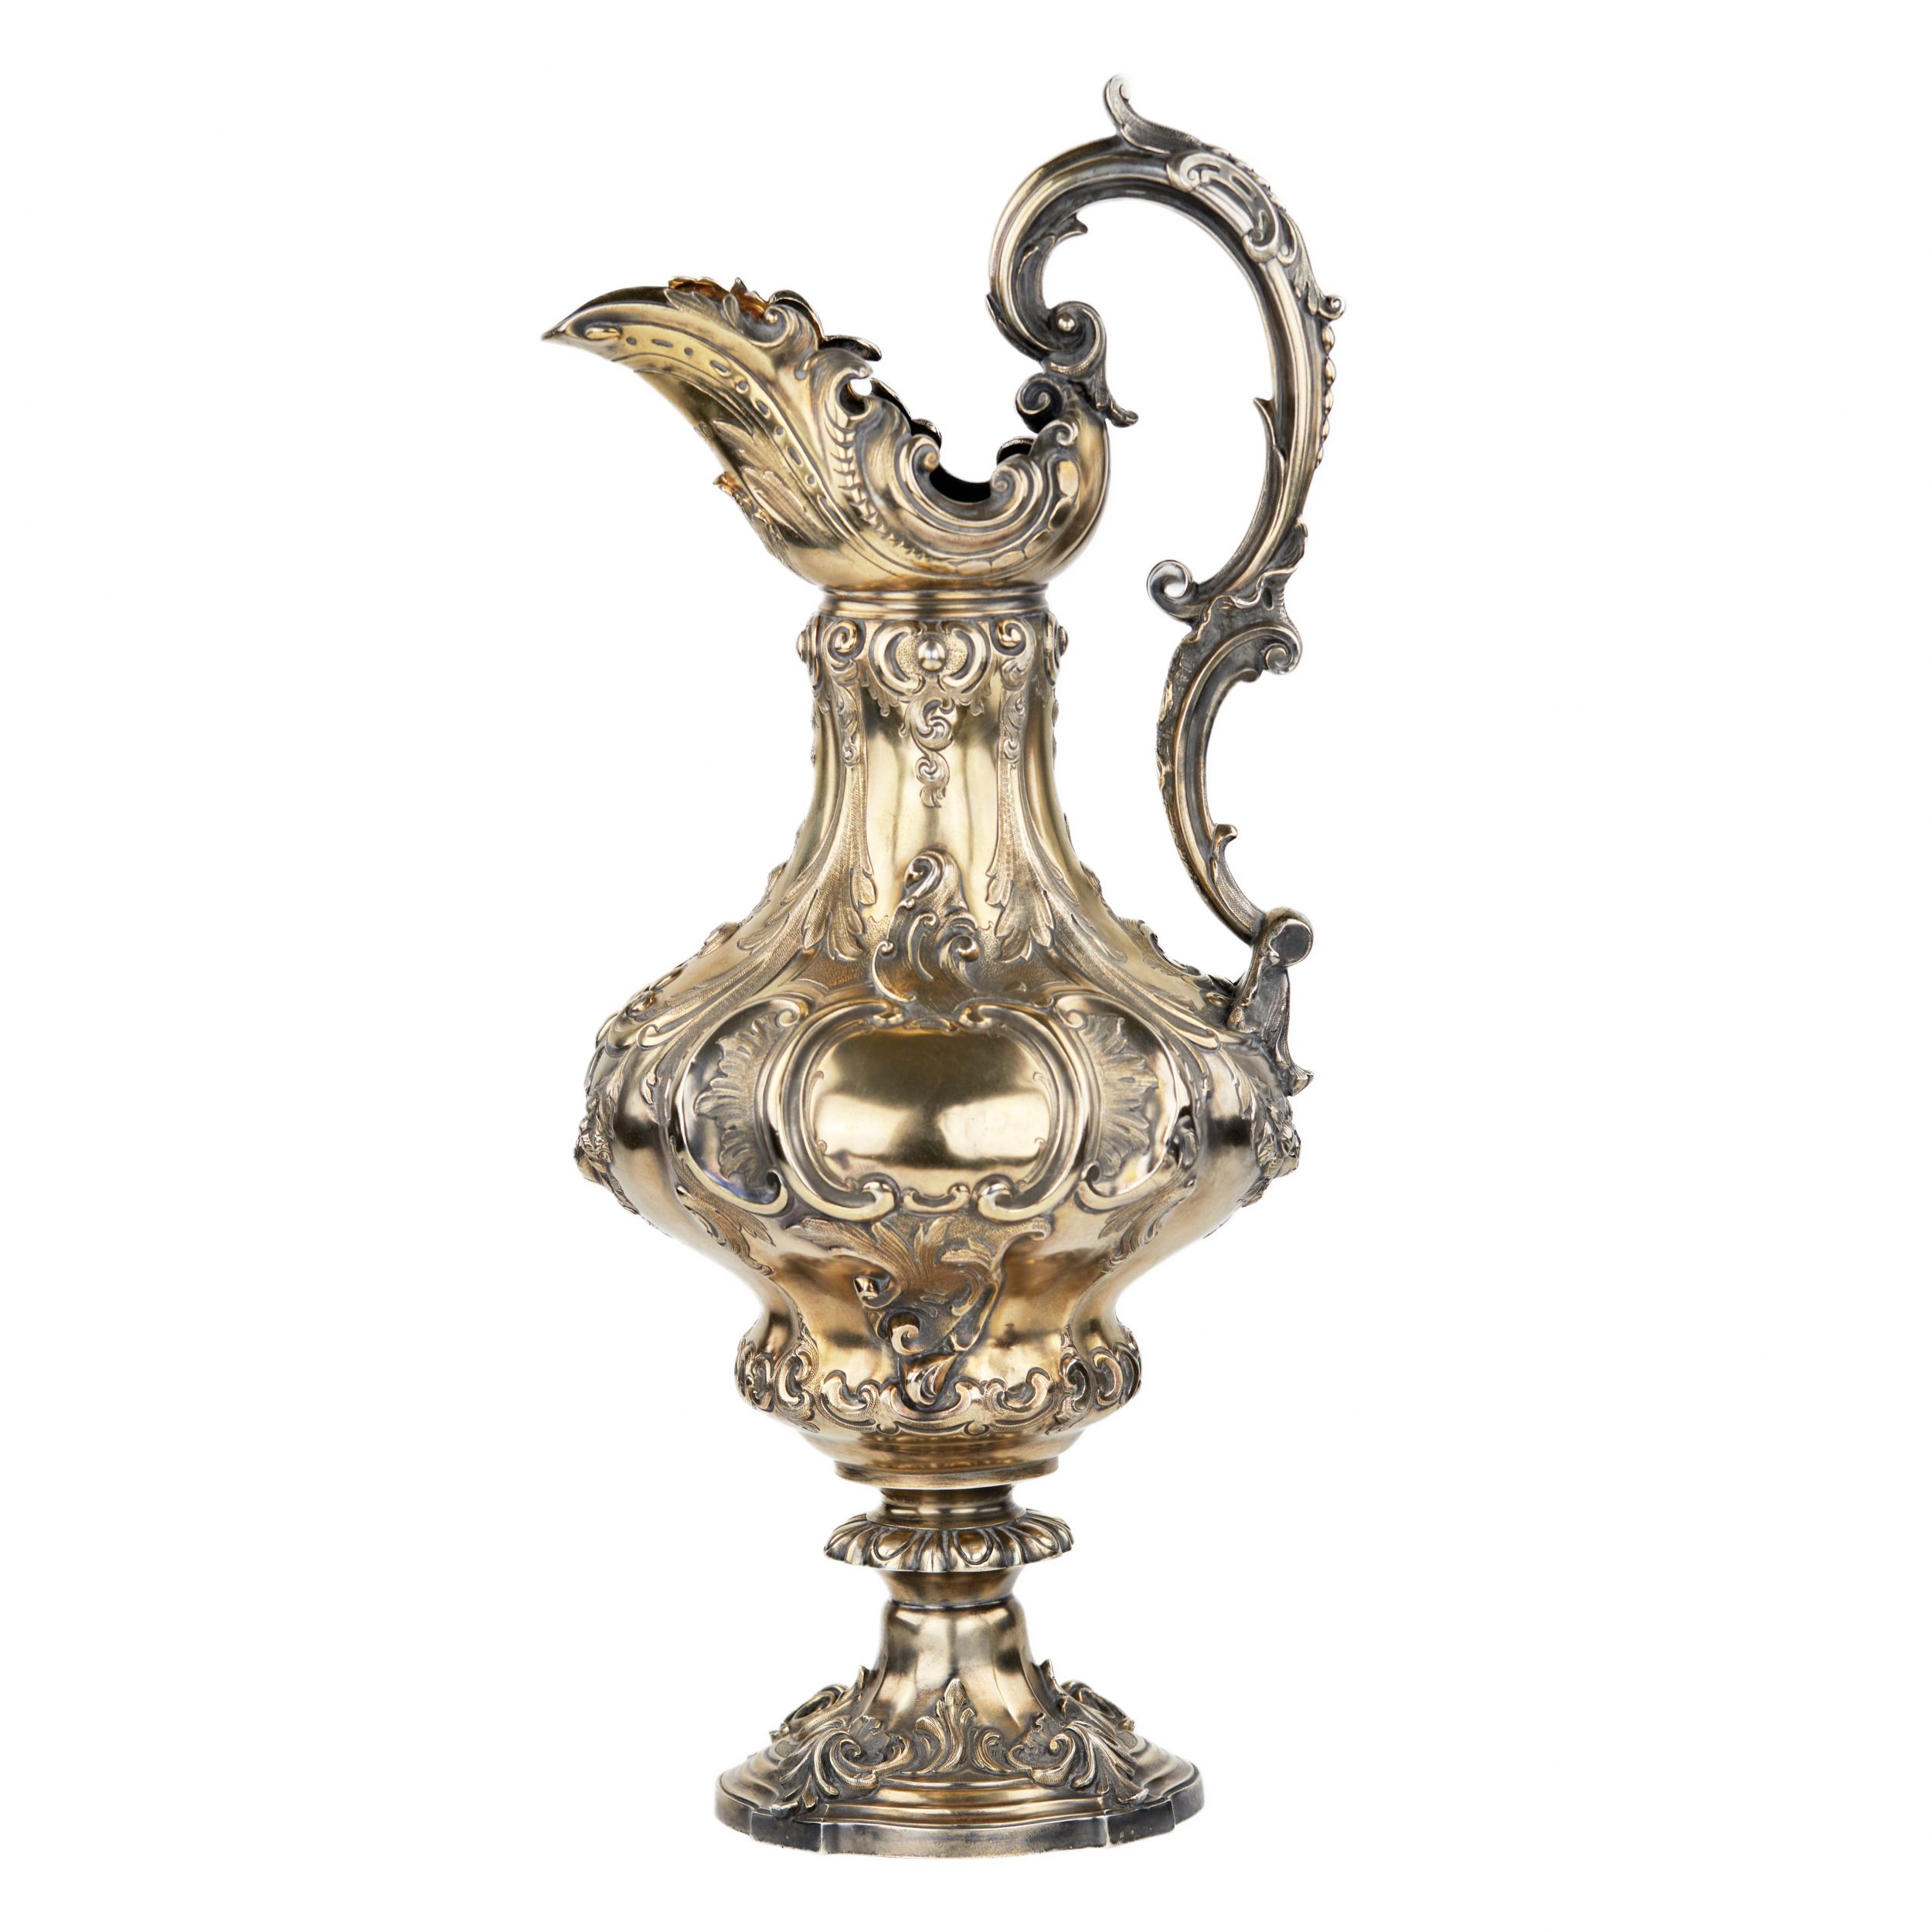 Robert-Harper-A-grandiose-gilded-silver-water-pitcher-London-1876-